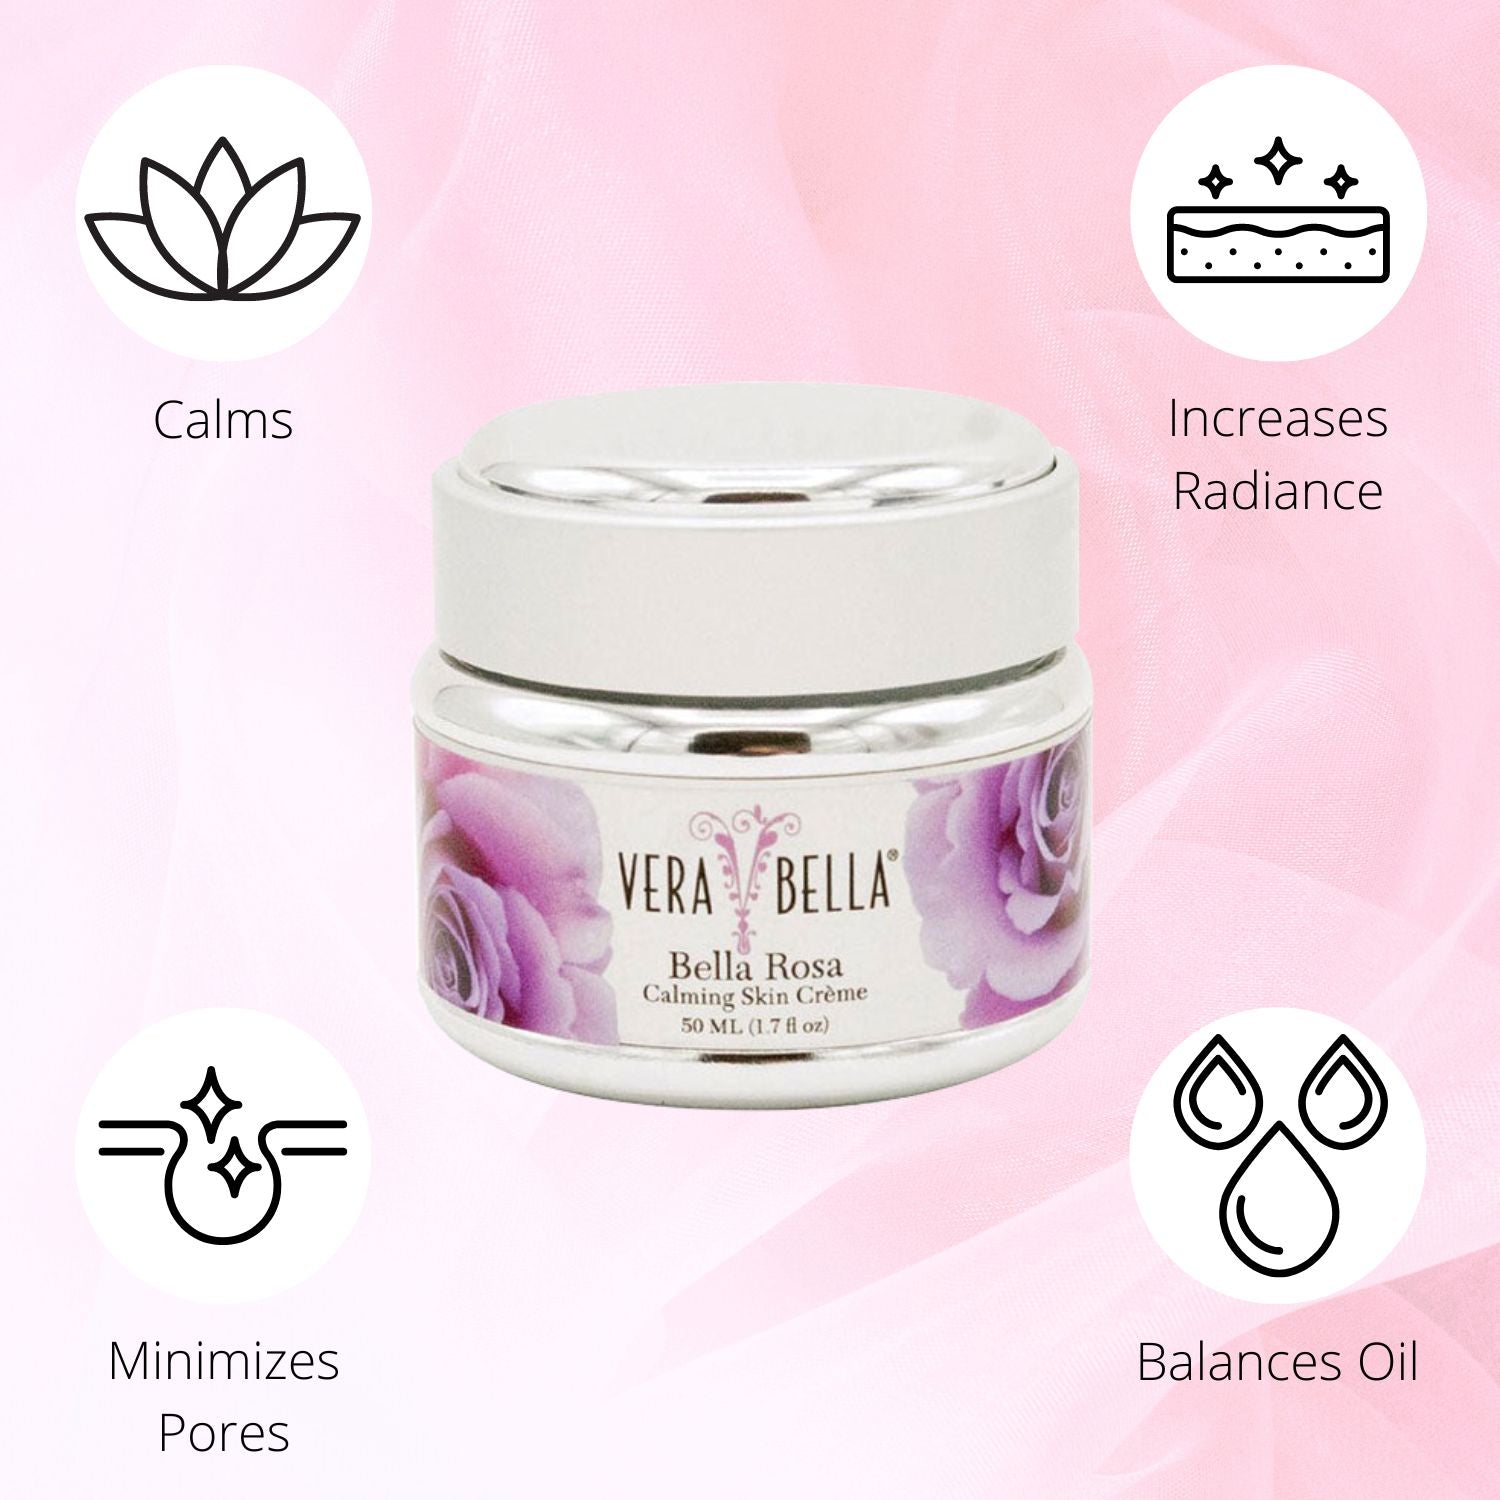 Verabella Bella Rosa Calming Skin Creme minimizes pores and balances oil